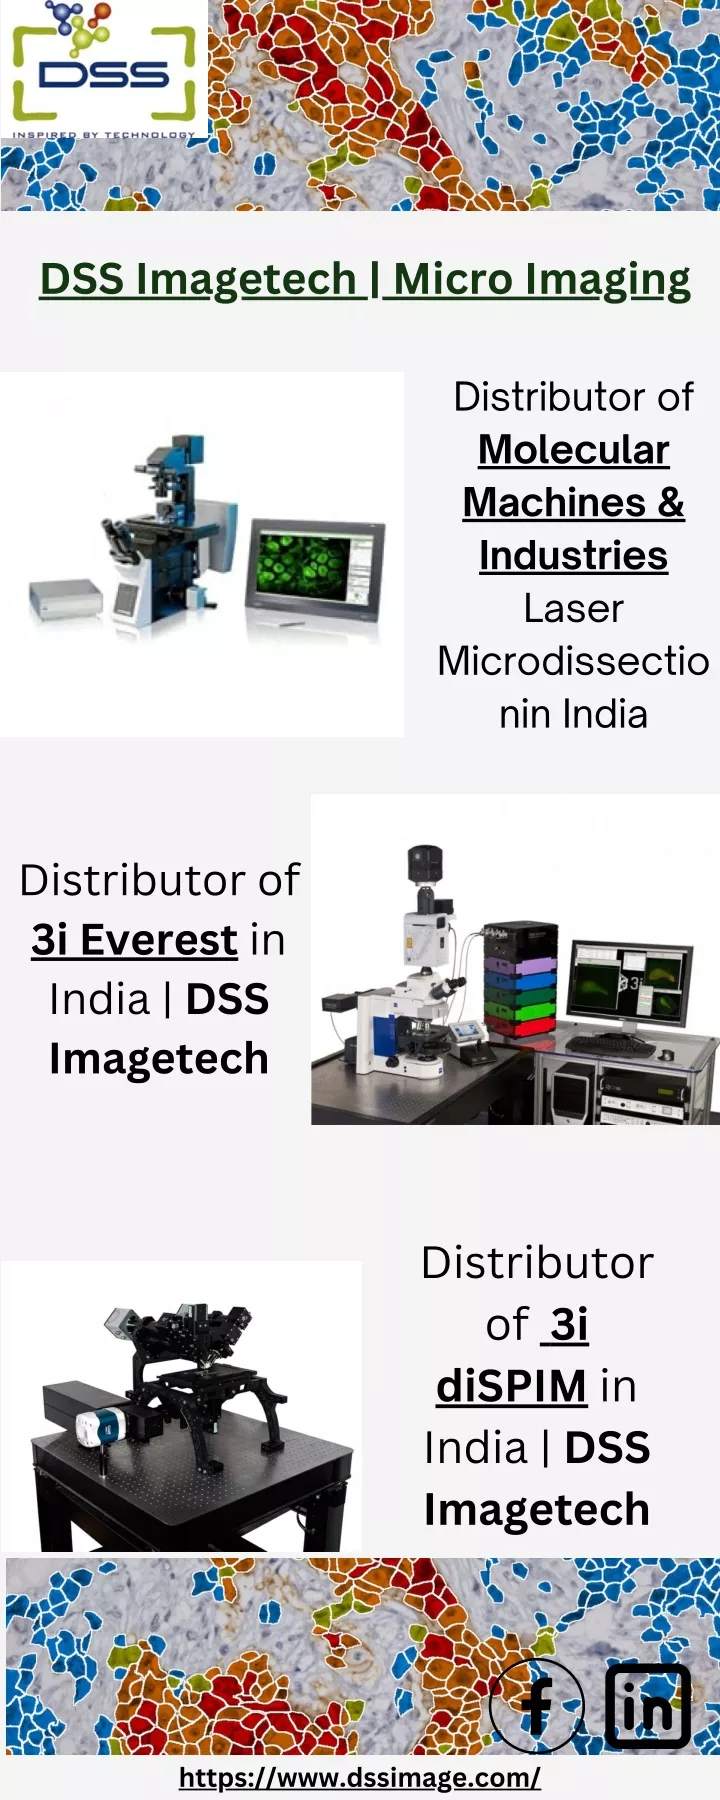 dss imagetech micro imaging